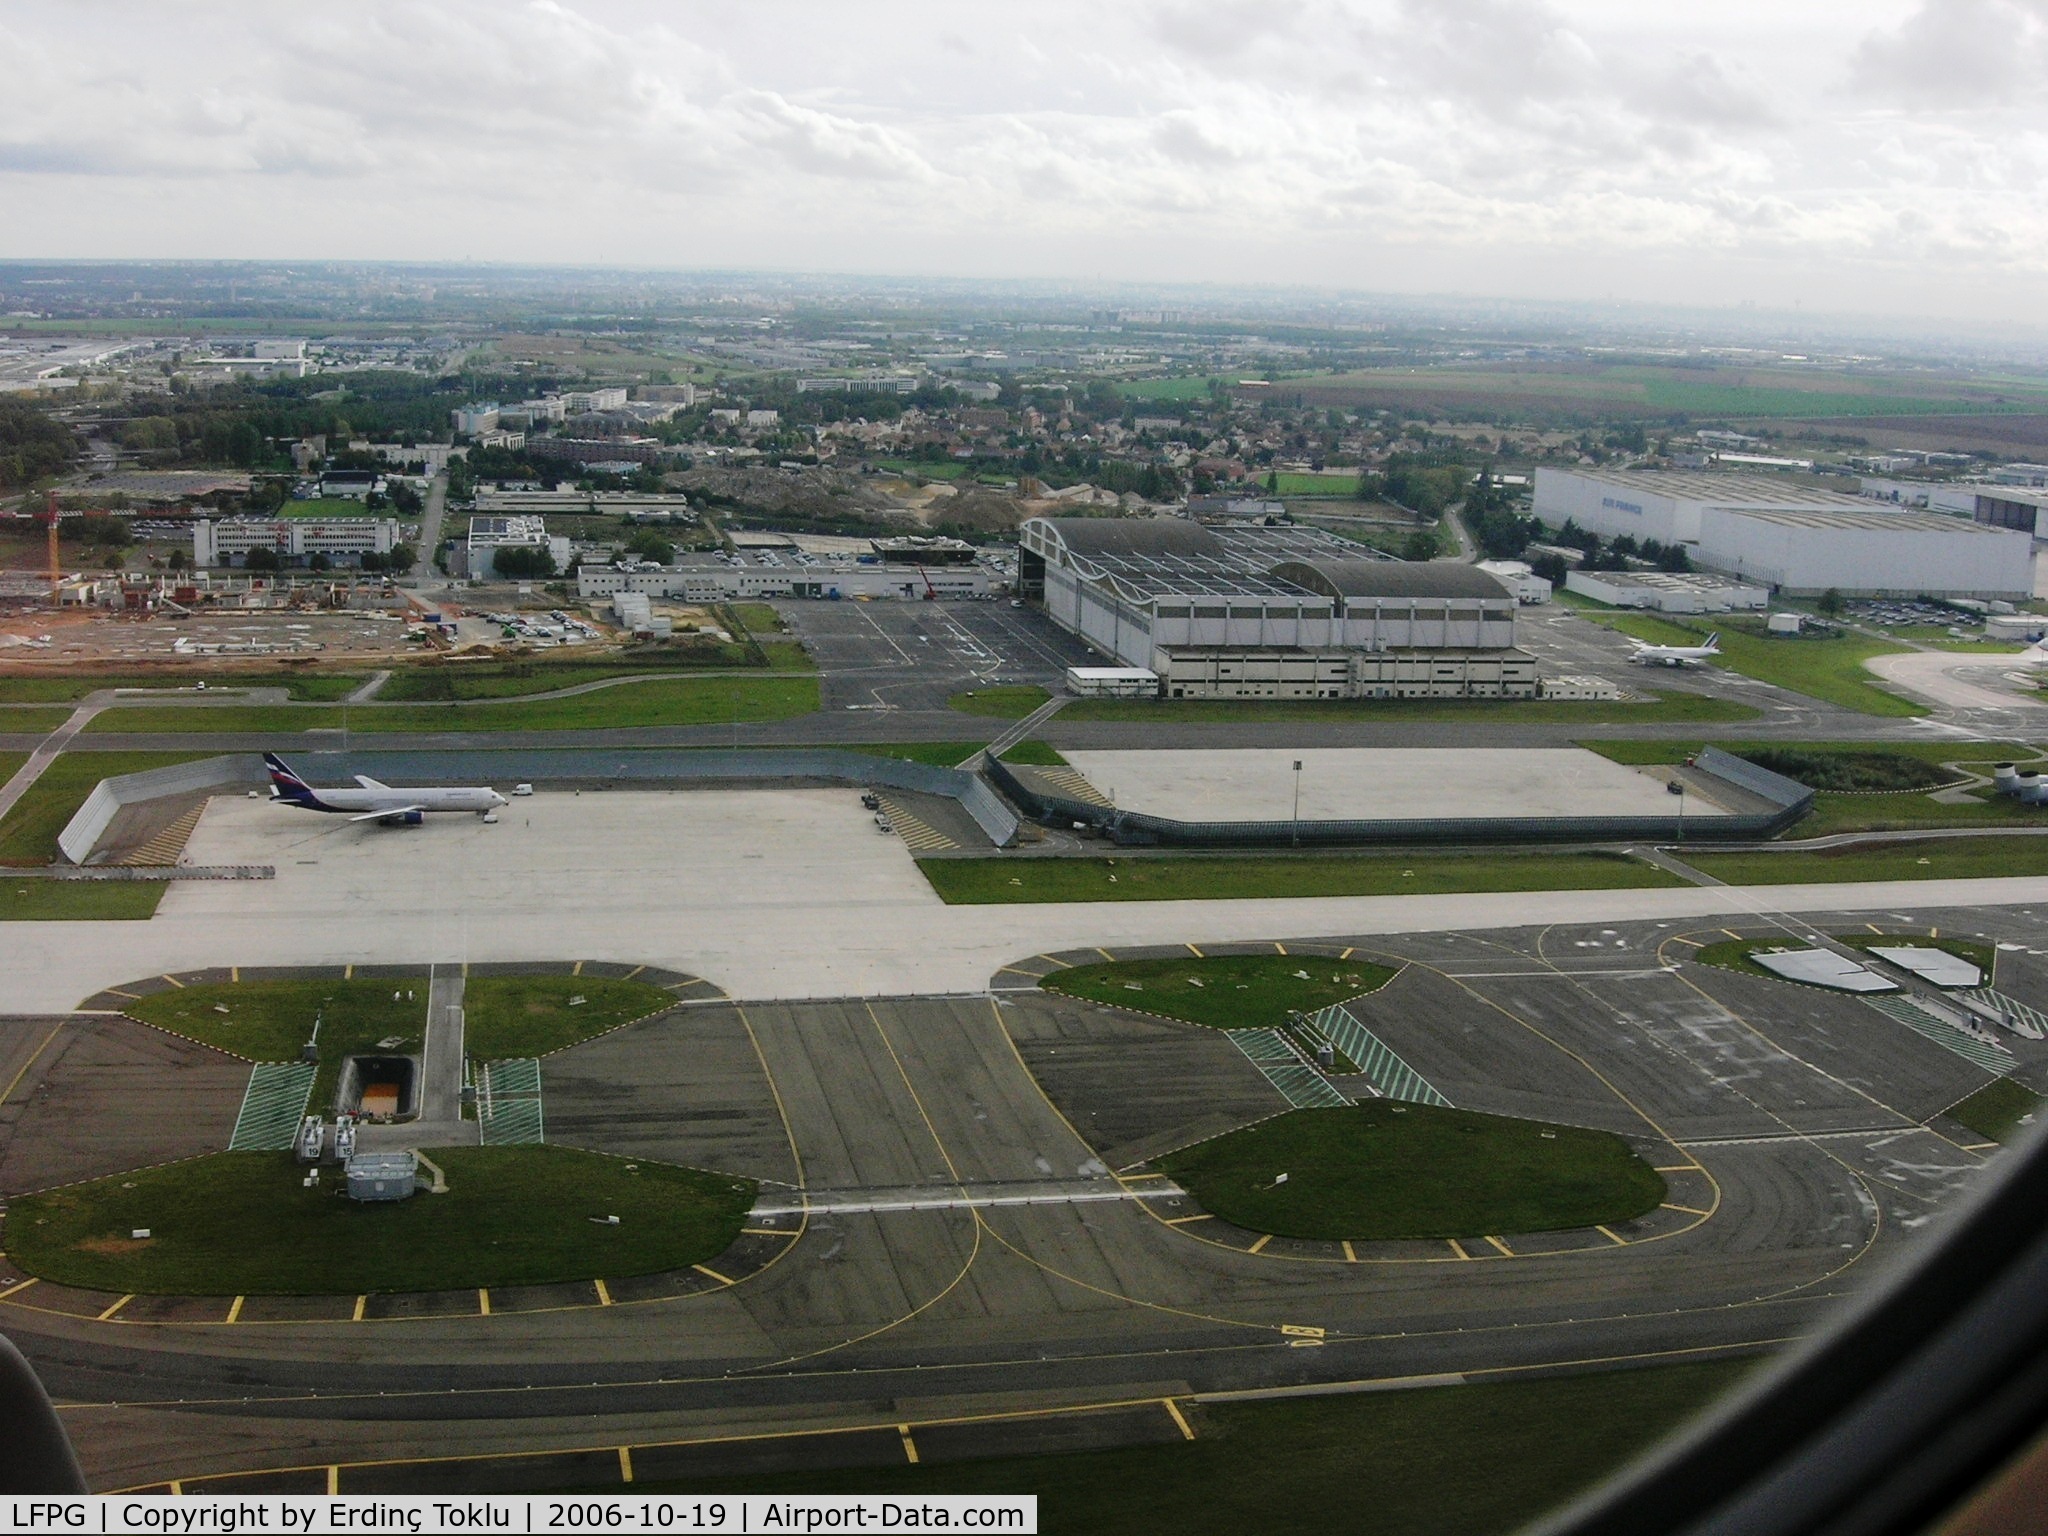 Paris Charles de Gaulle Airport (Roissy Airport), Paris France (LFPG) - Air France Maintenance seen from 27L/Paris in the back.